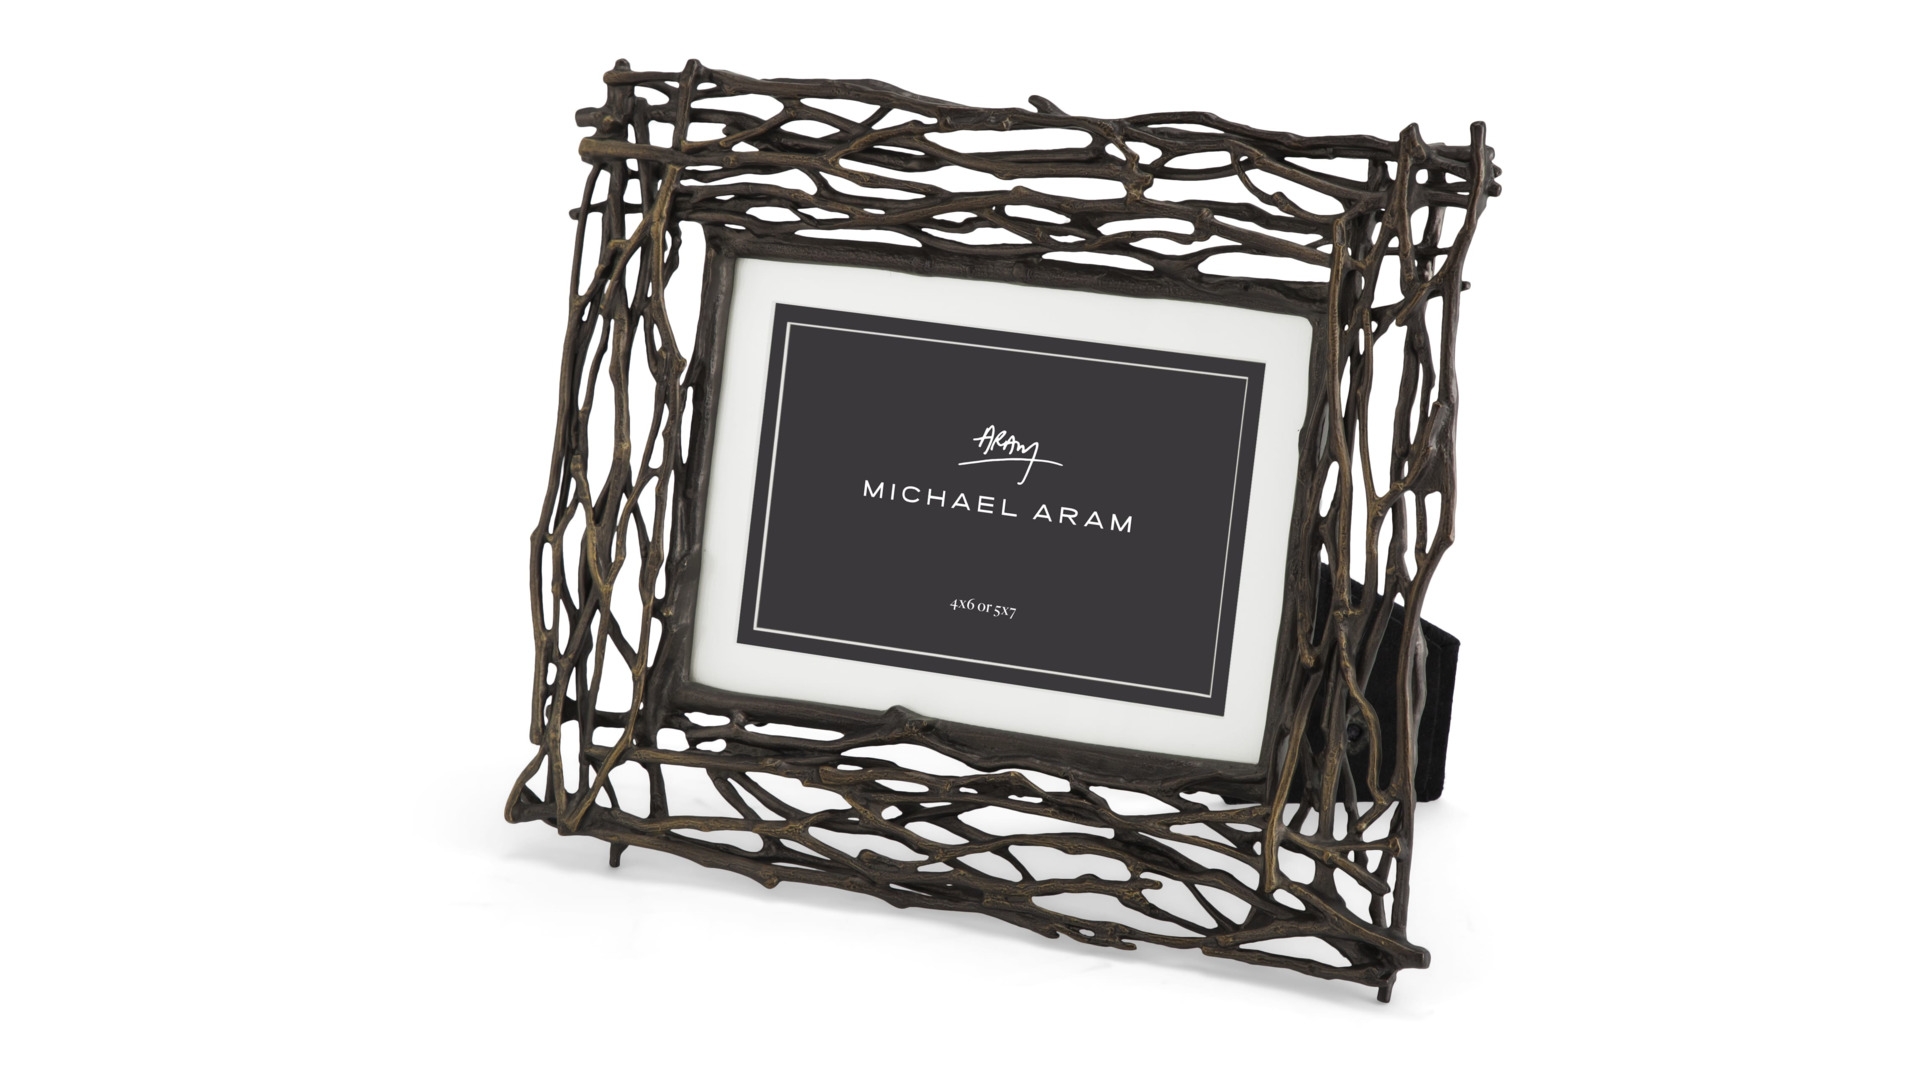 Рамка для фото Michael Aram Ветви 10x15 см, коричневая